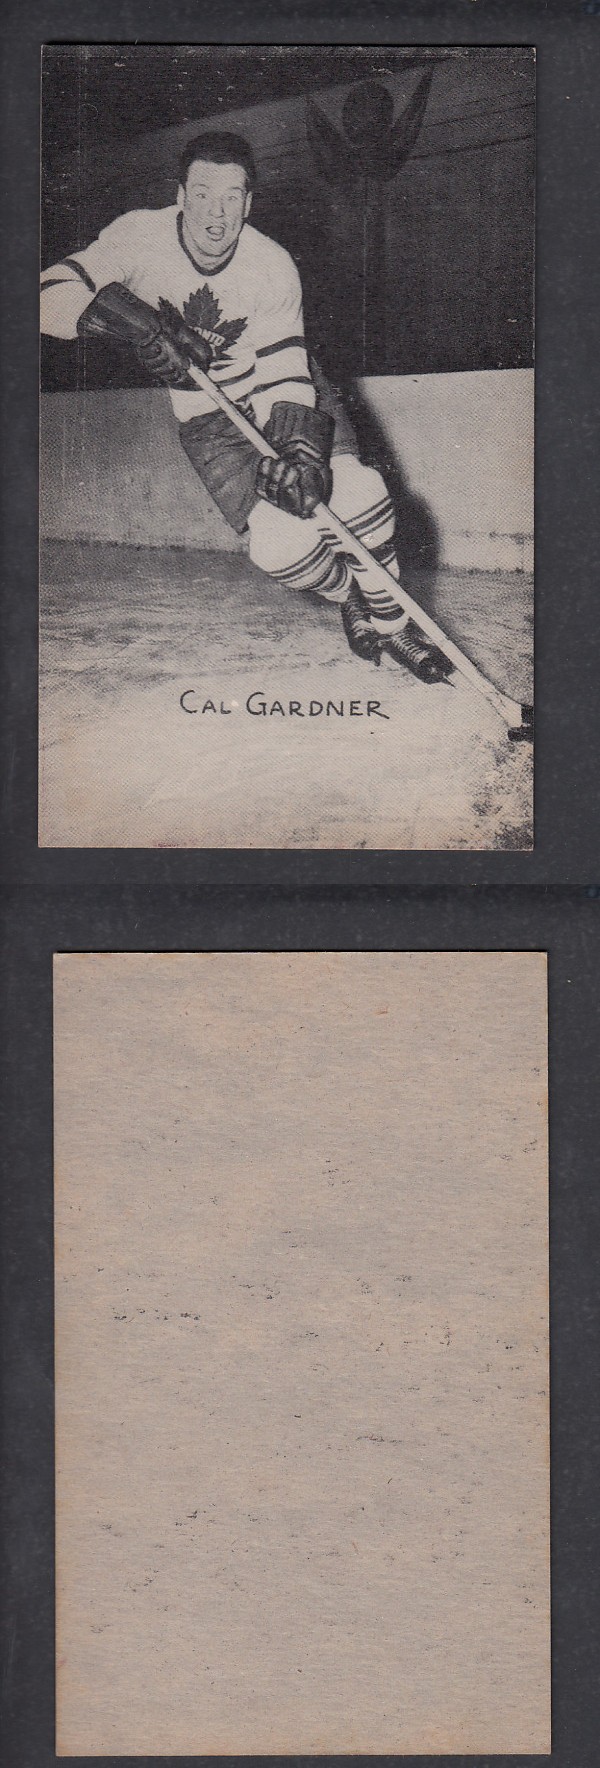 1948-52 EXHIBITS HOCKEY CARD C. GARDNER photo